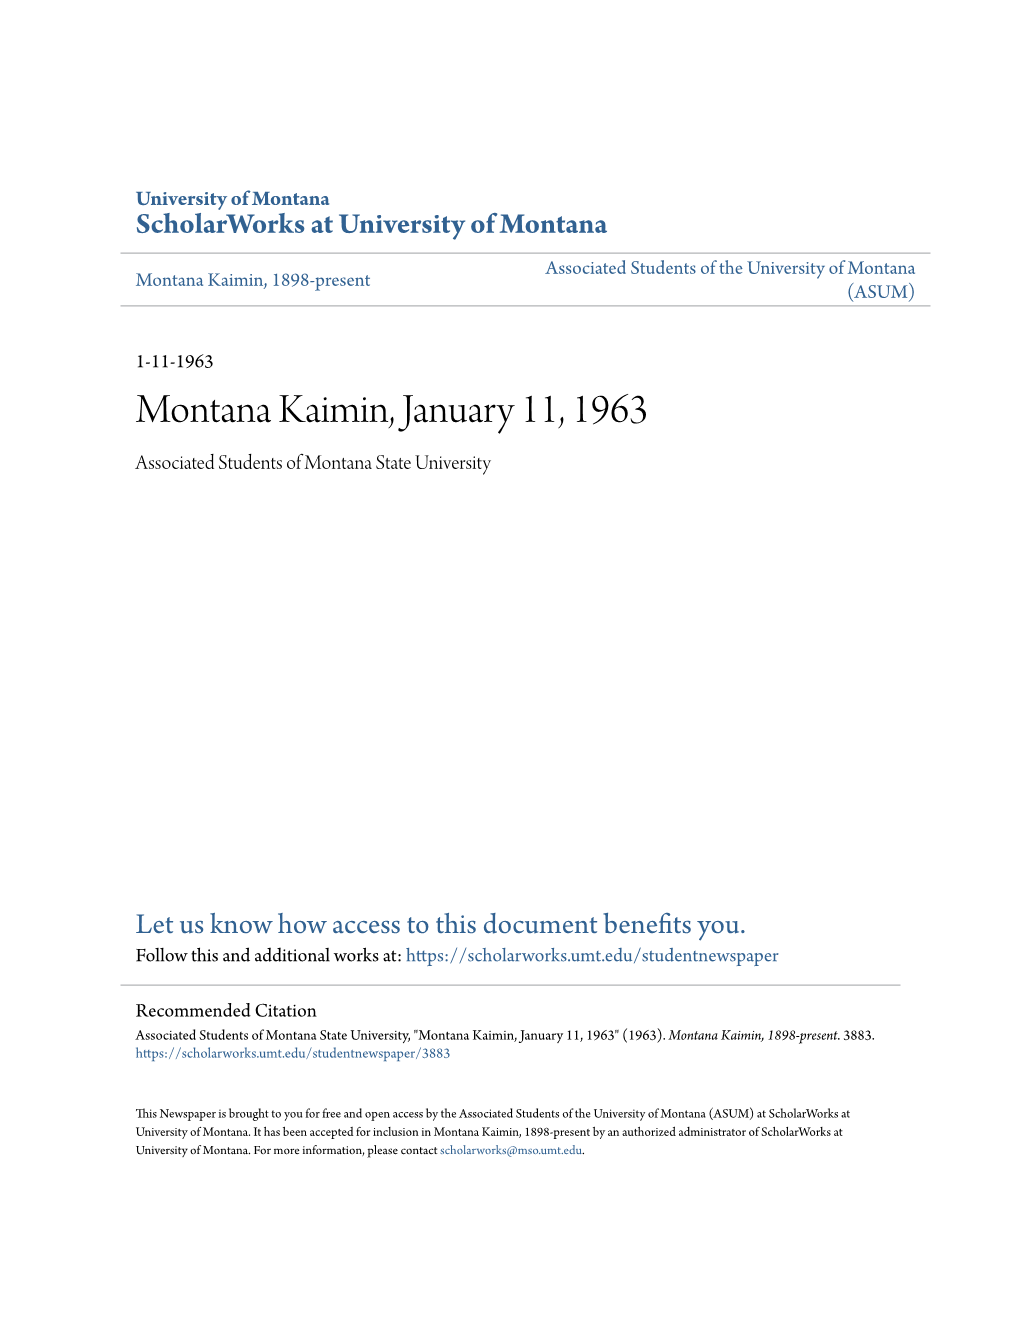 Montana Kaimin, January 11, 1963 Associated Students of Montana State University